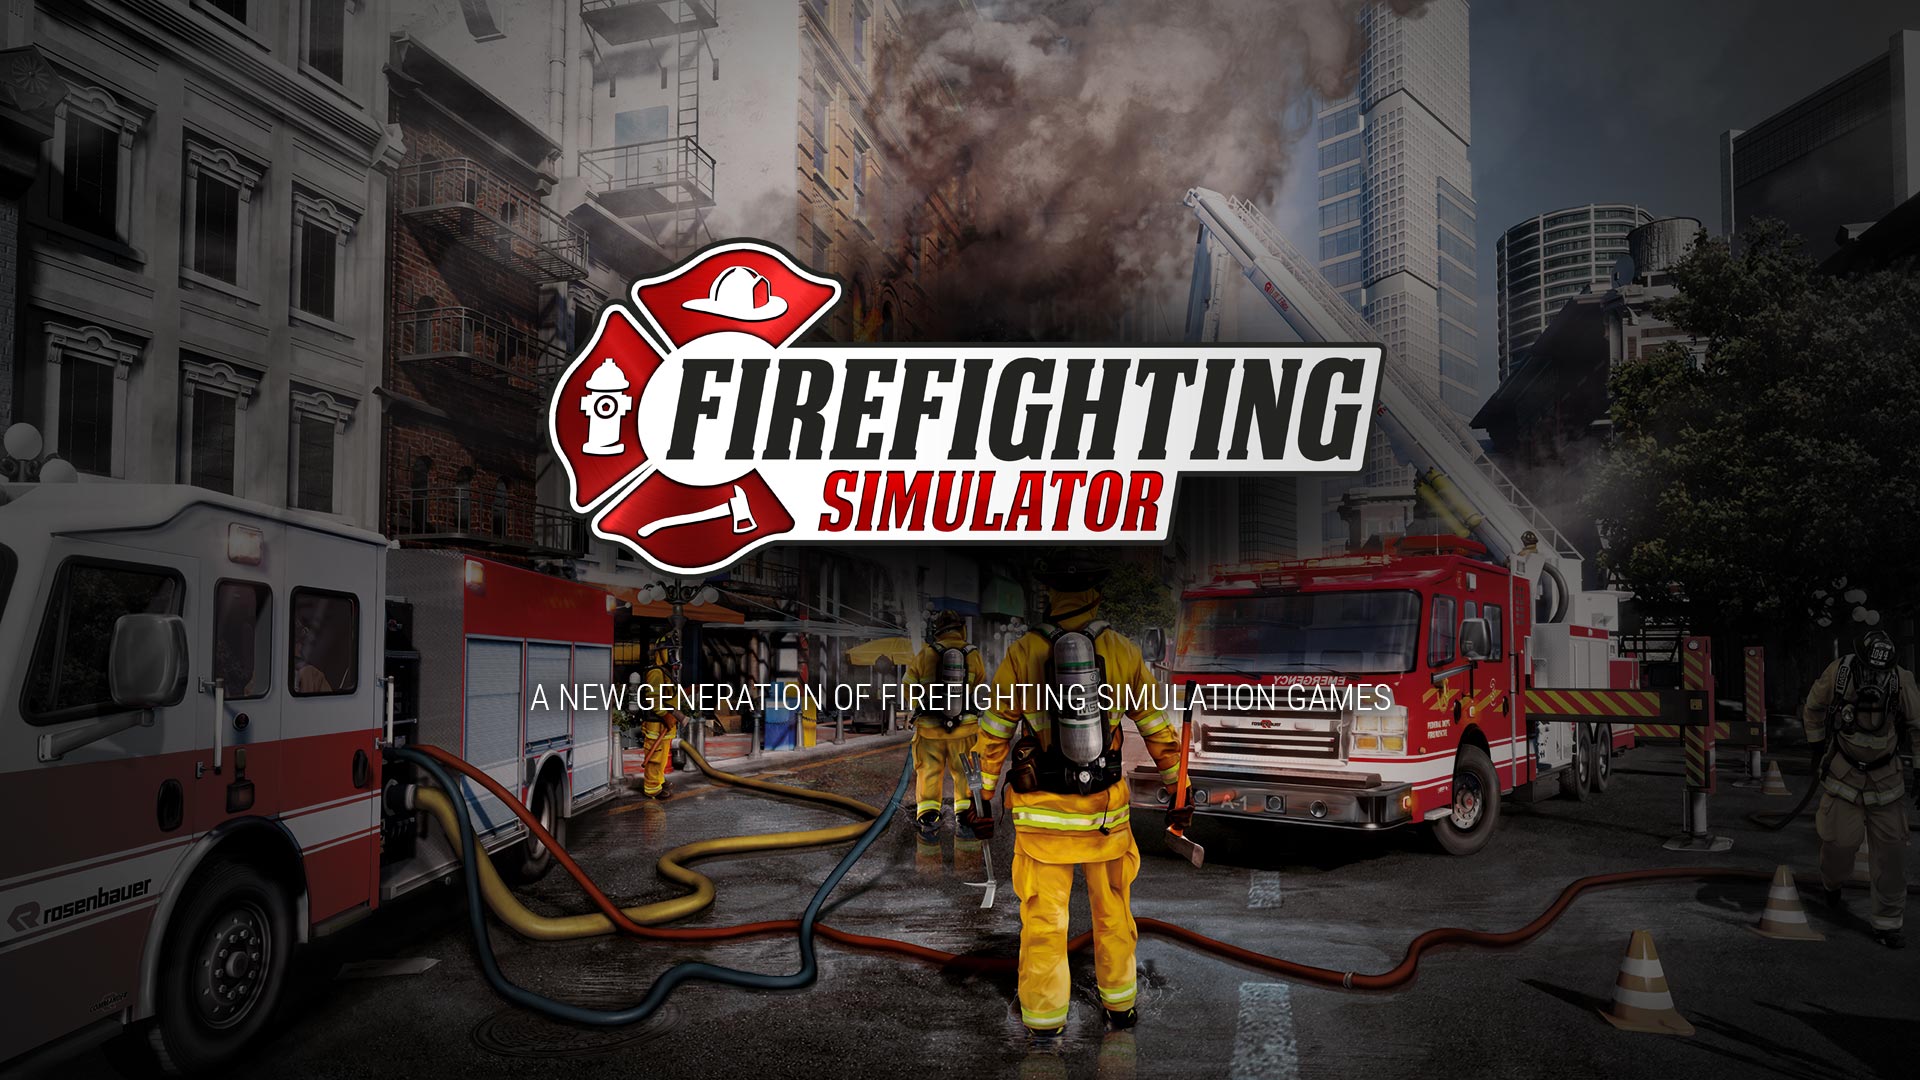 Firefighter simulator games online